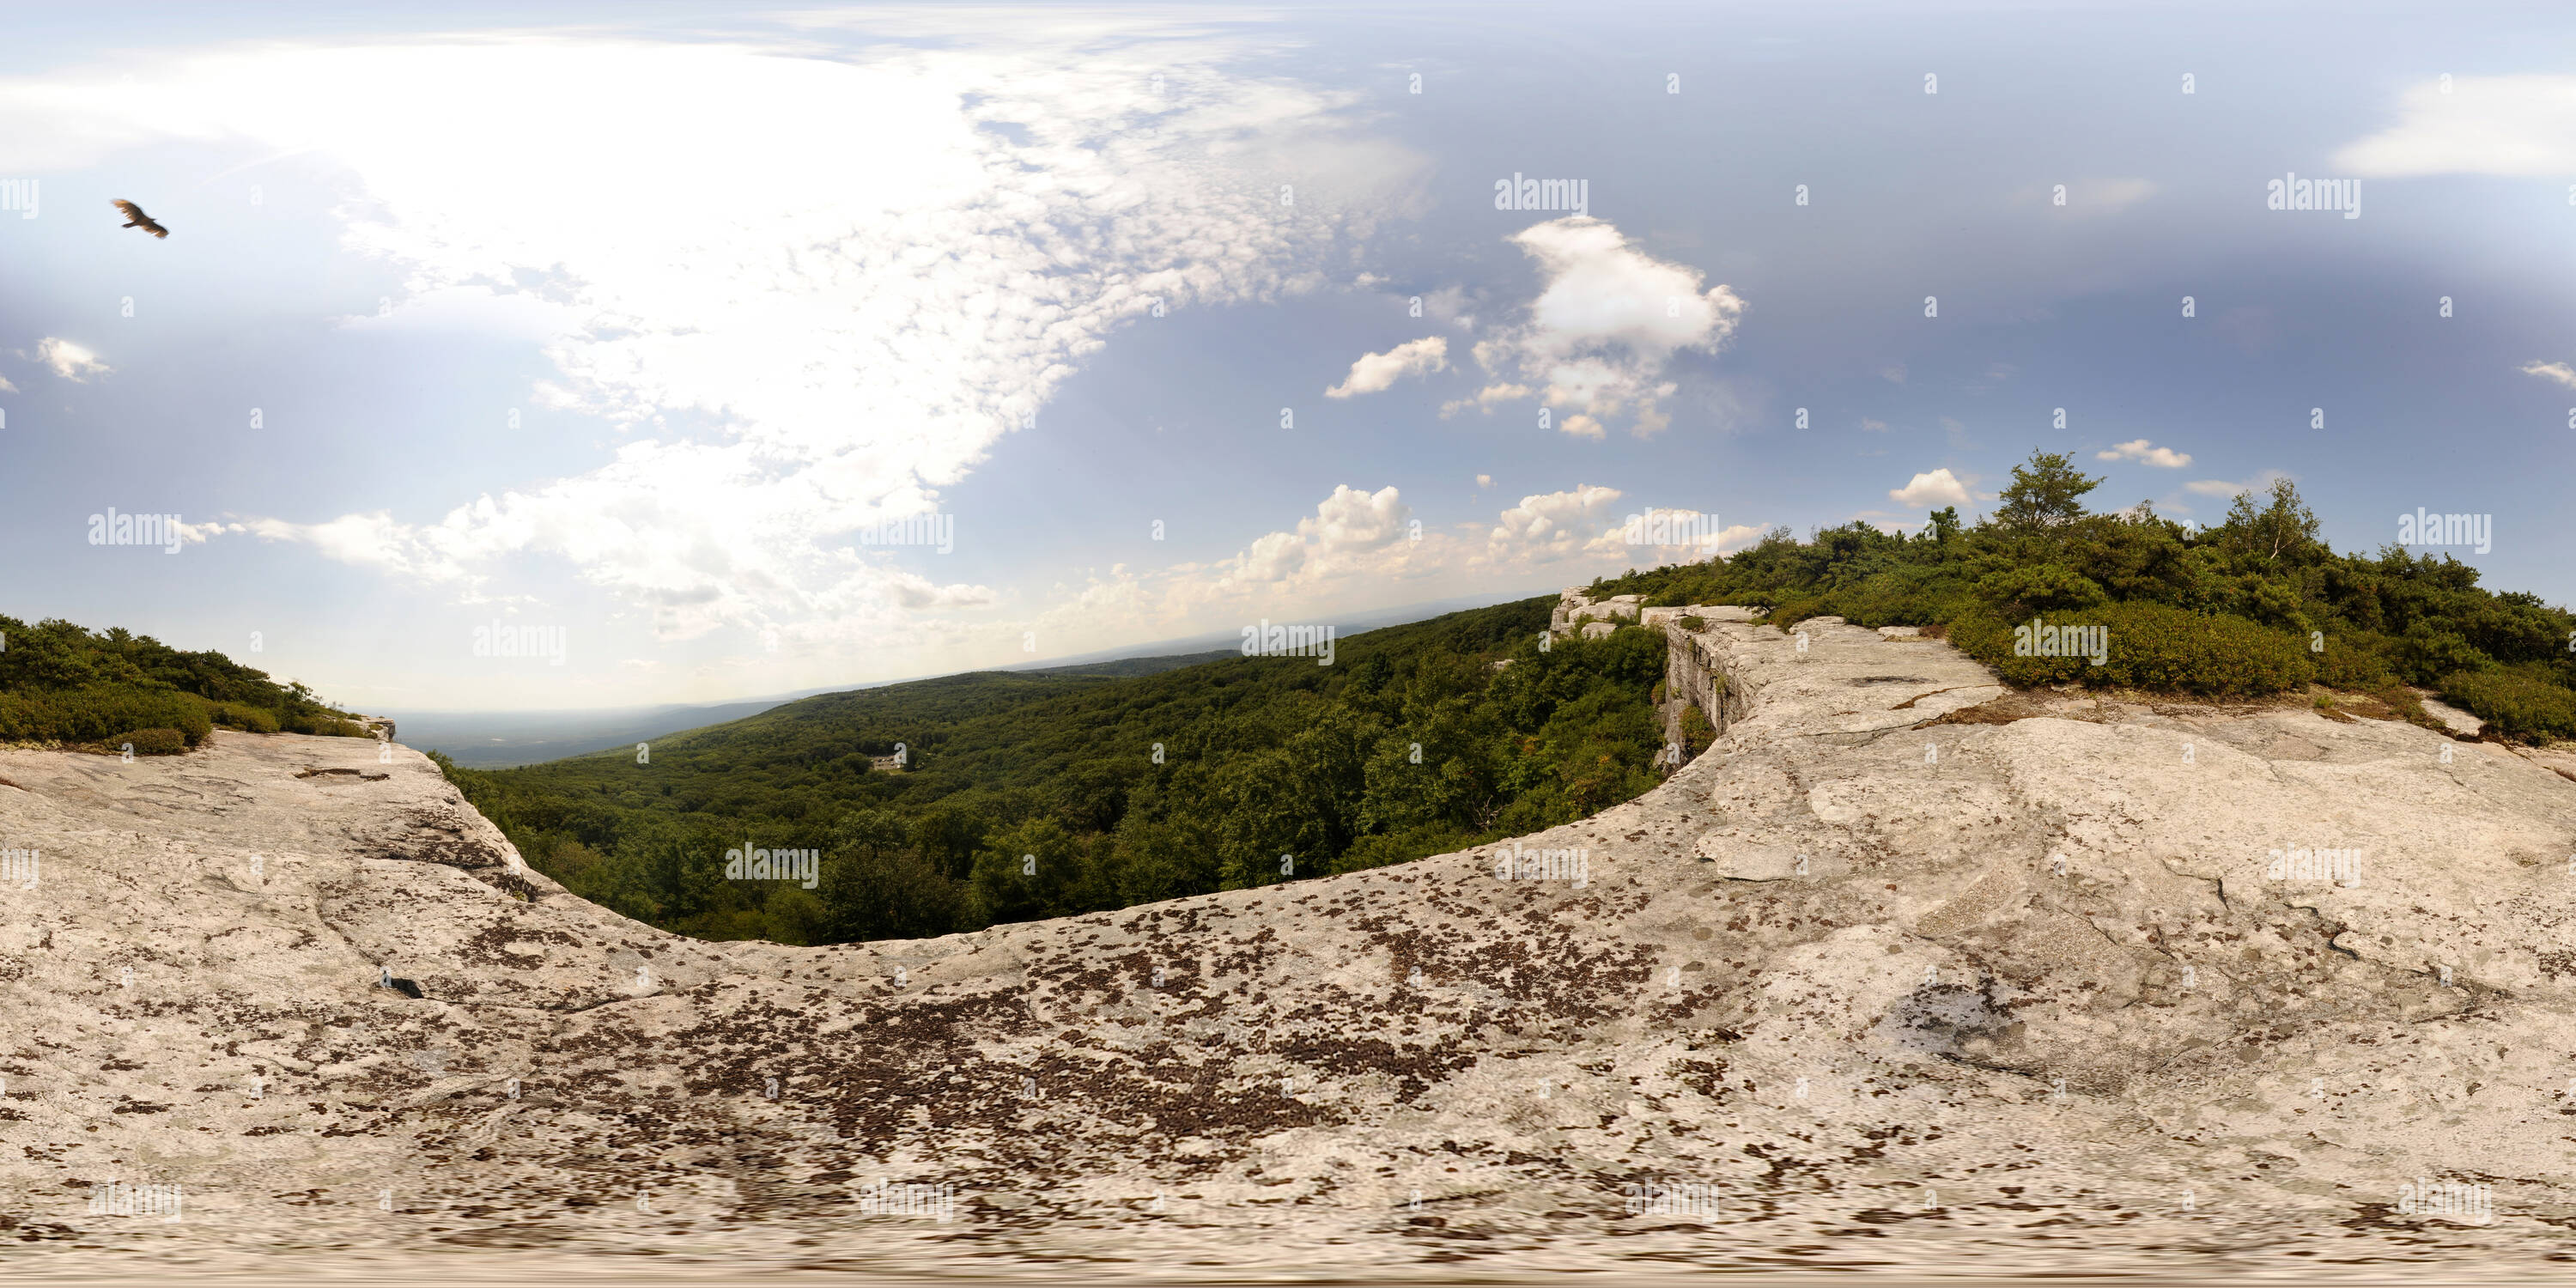 360 degree panoramic view of Sam's Point